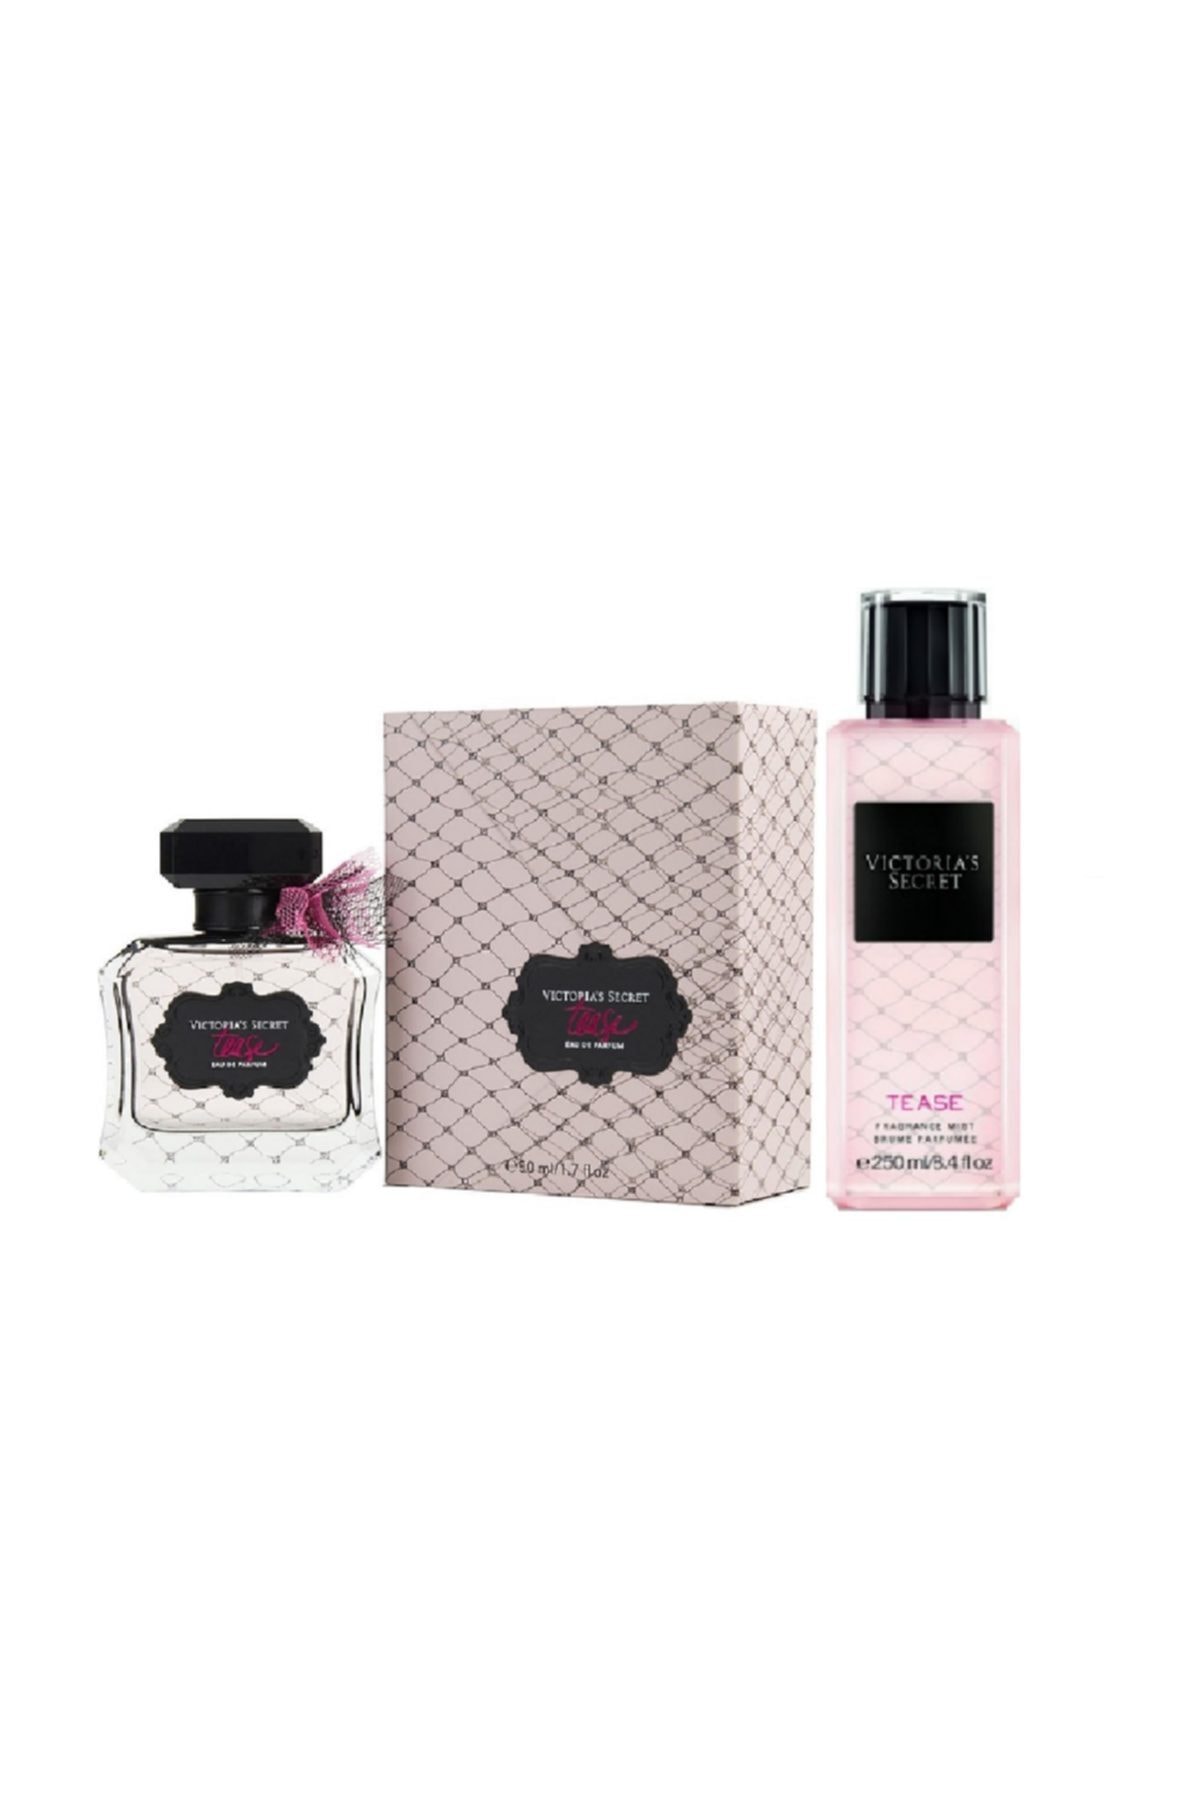 Victoria's Secret Tease New Collection Edp 50 Ml Kadın Parfüm 250ml Vücut Spreyi 2li Kadın Parfüm Seti s1667545124310